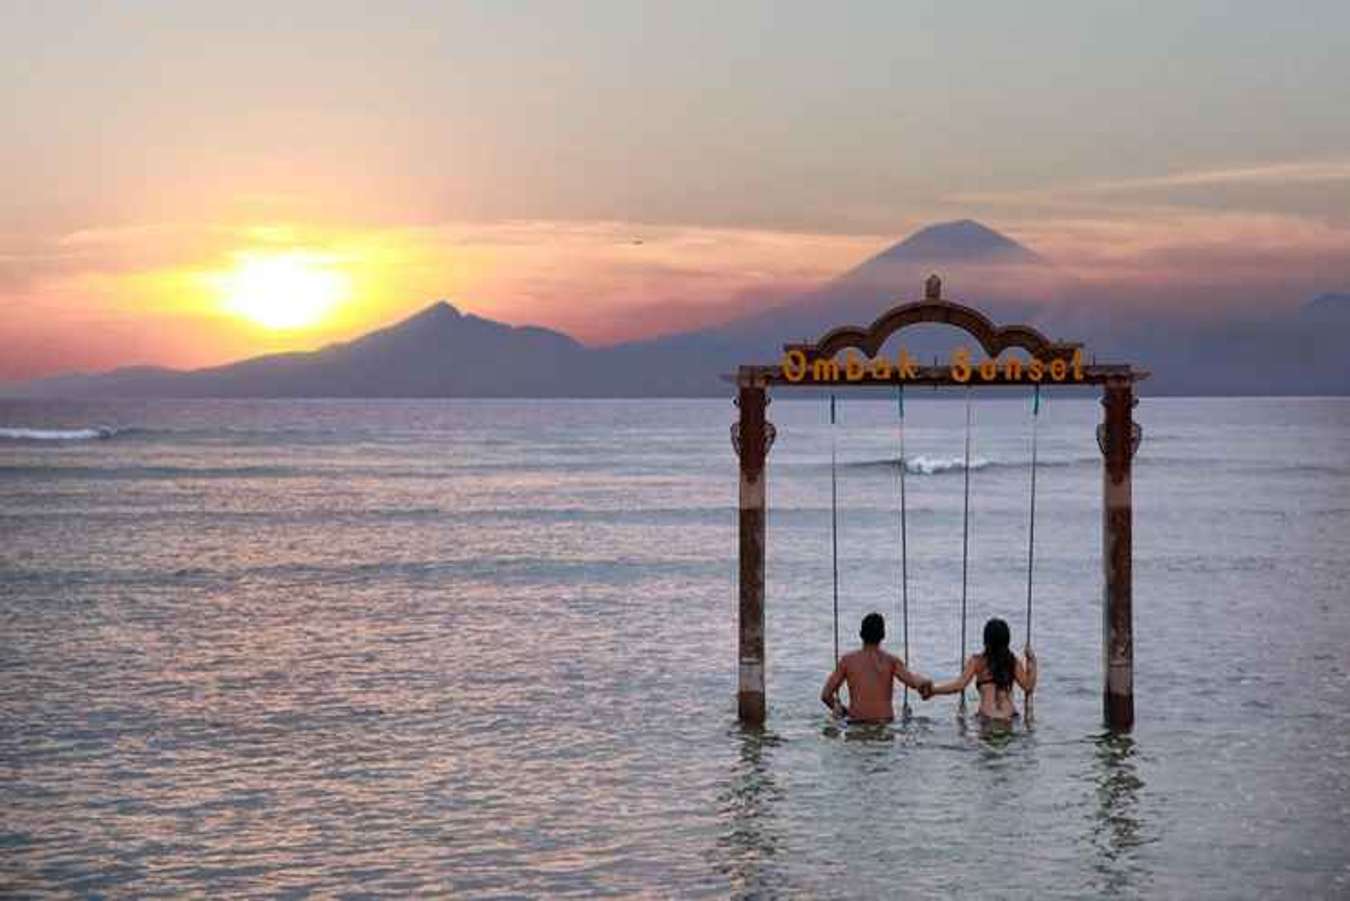 Ombak Sunset Hotel - Hotel romantis di Lombok